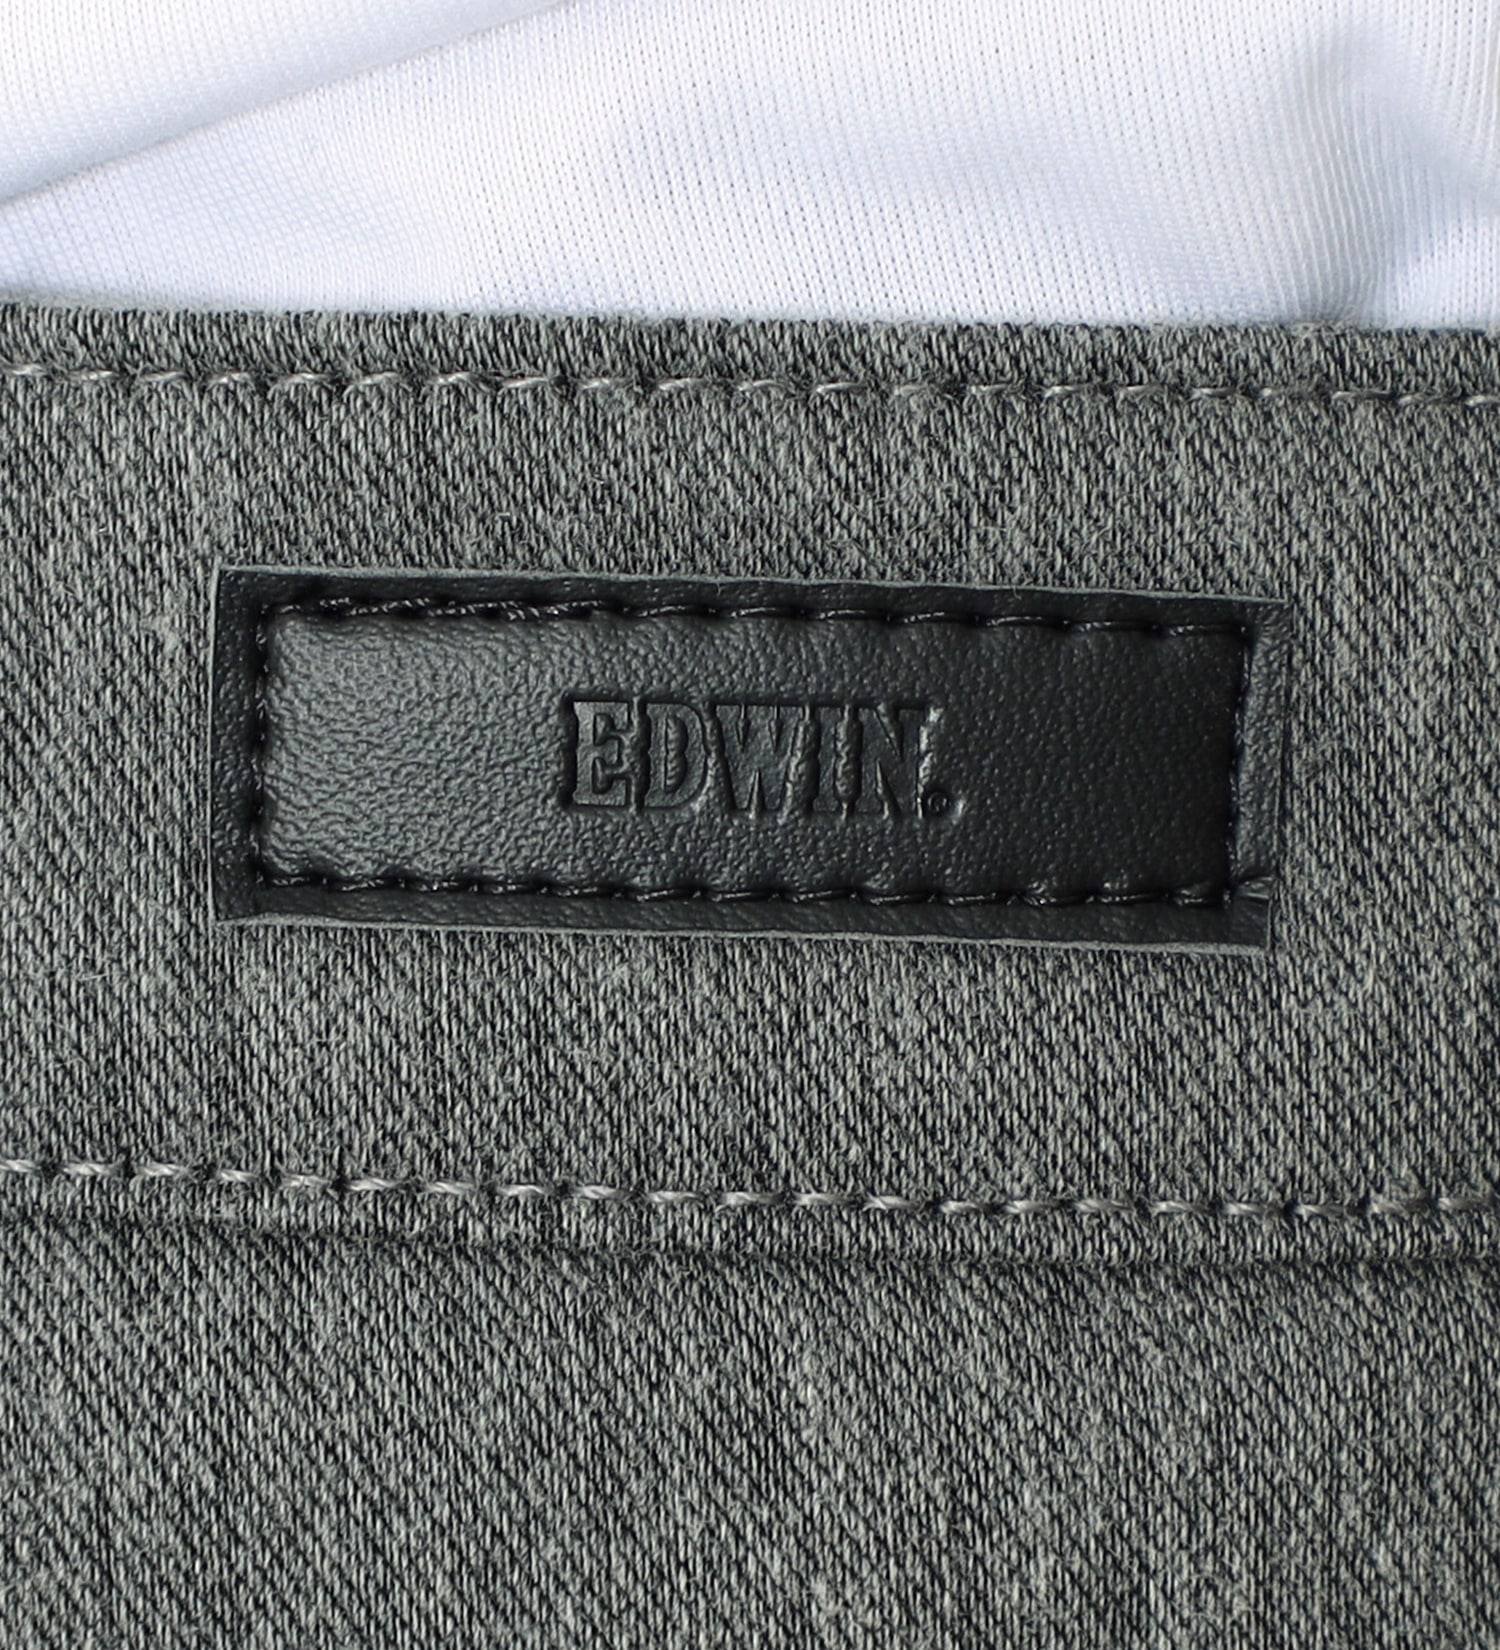 EDWIN(エドウイン)のデニスラ スリムテーパード パンツ|パンツ/スラックス/メンズ|グレー